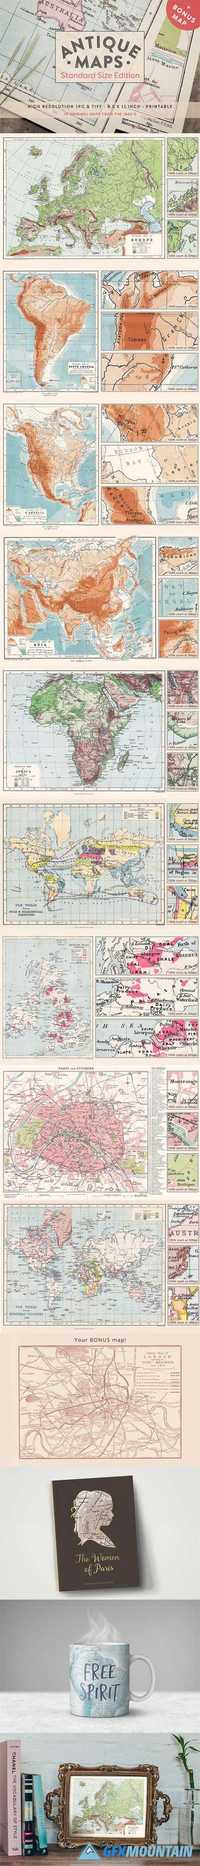  Antique Maps Vol.I - Standard Size  704223